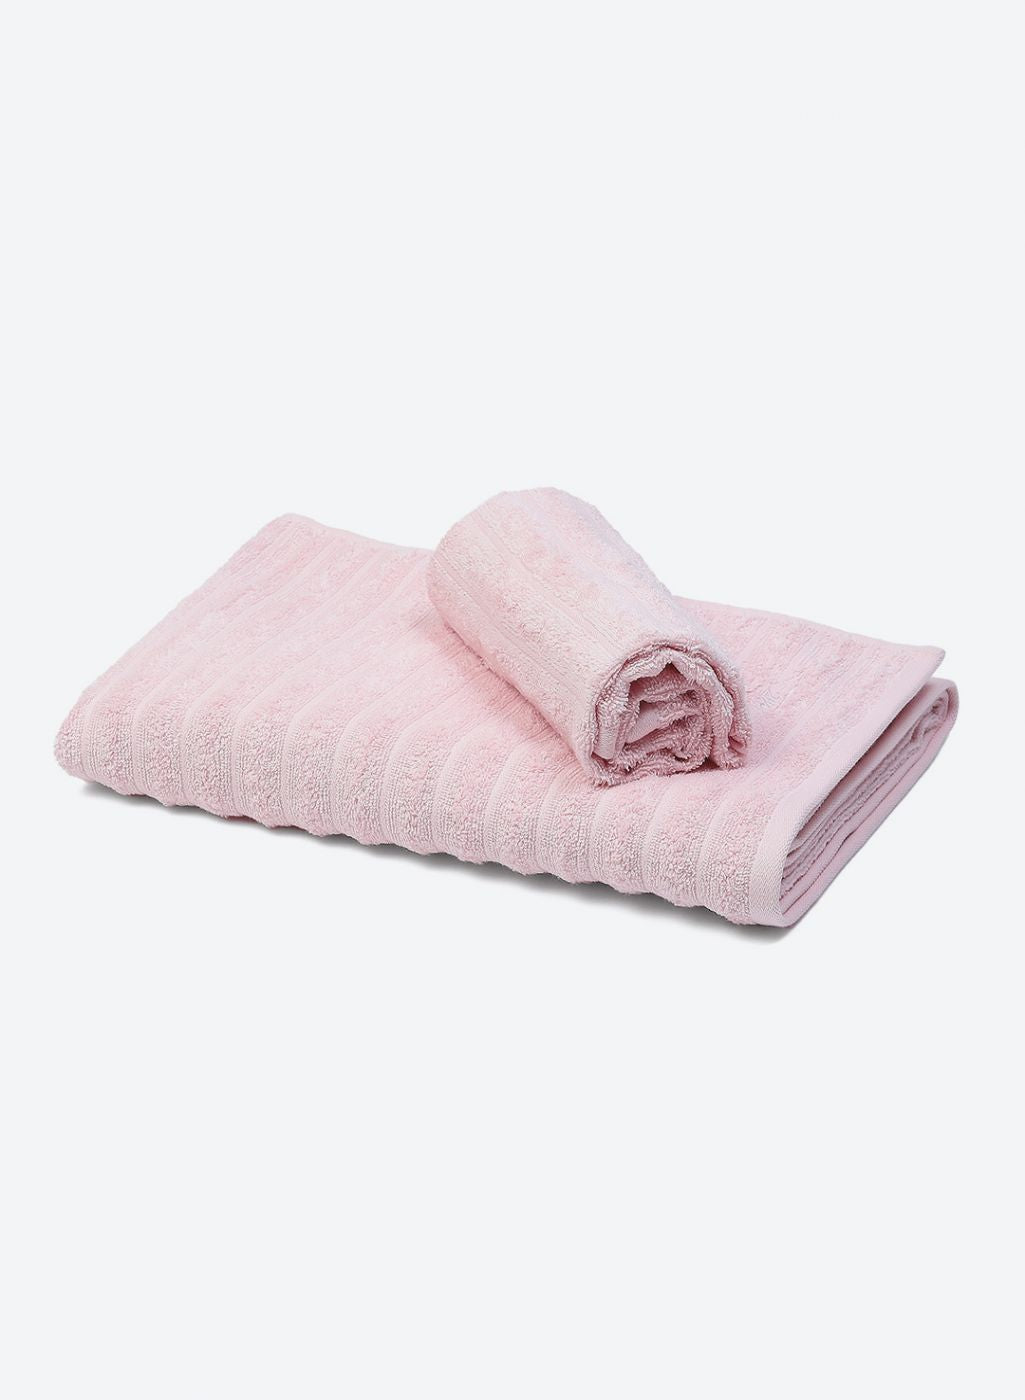 Light Pink Cotton 525 GSM Towel Set Pack of 2 (1 Bath & 1 Hand Towel)